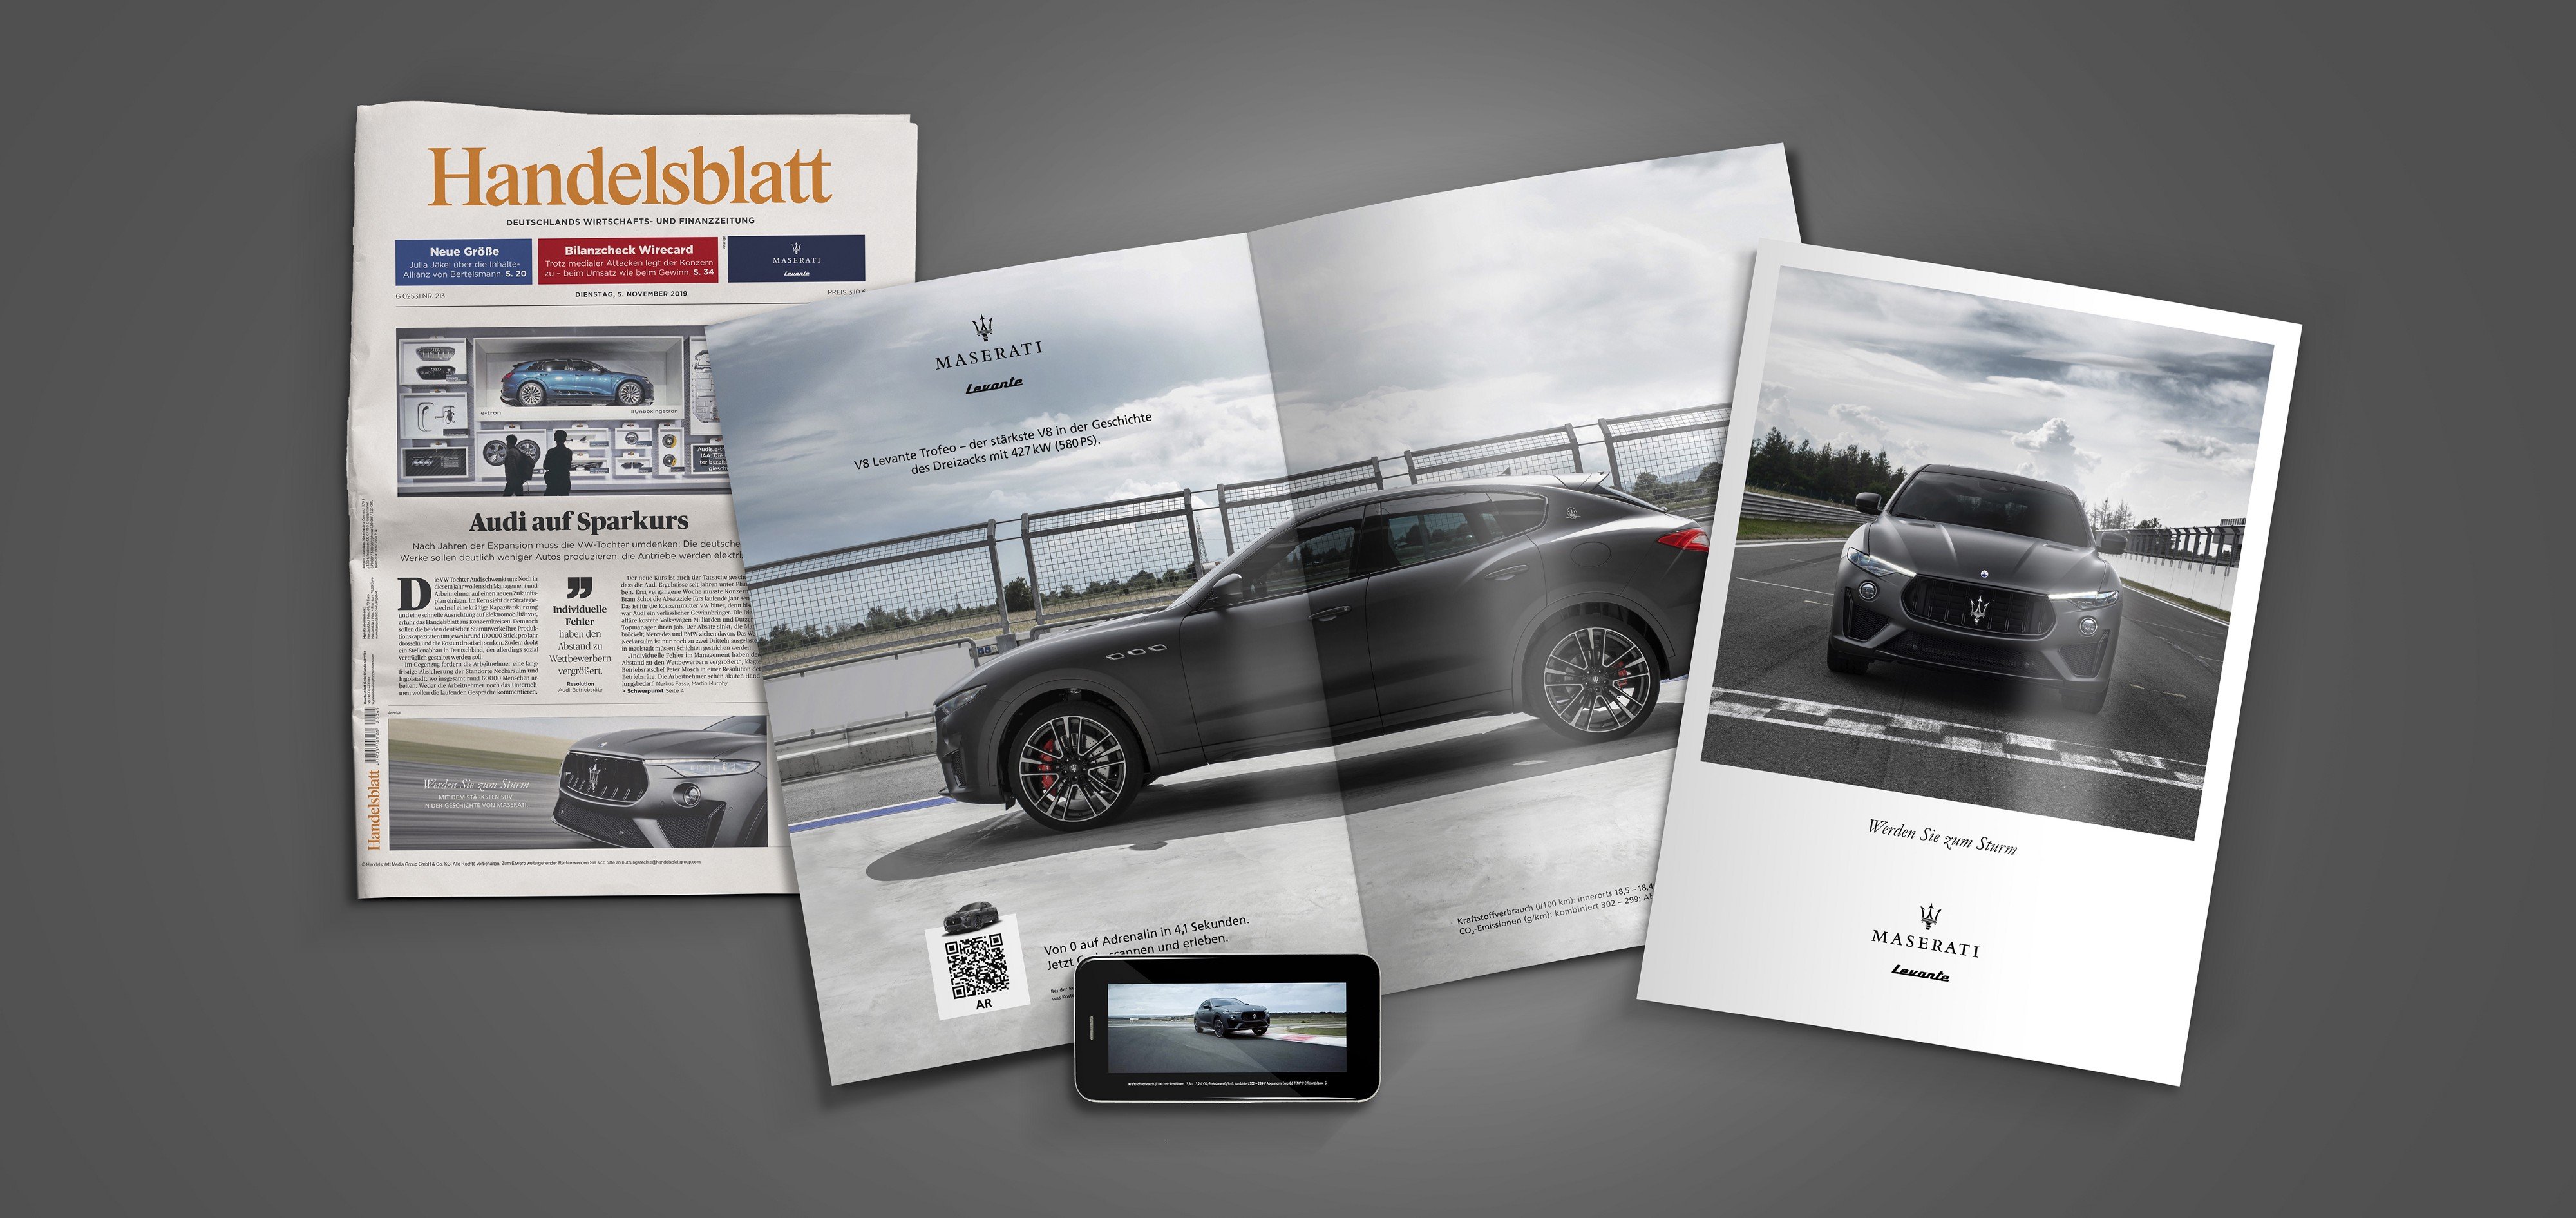 Maserati used a WebAR-activated print ad to showcase the new Maserati Levante Trofeo